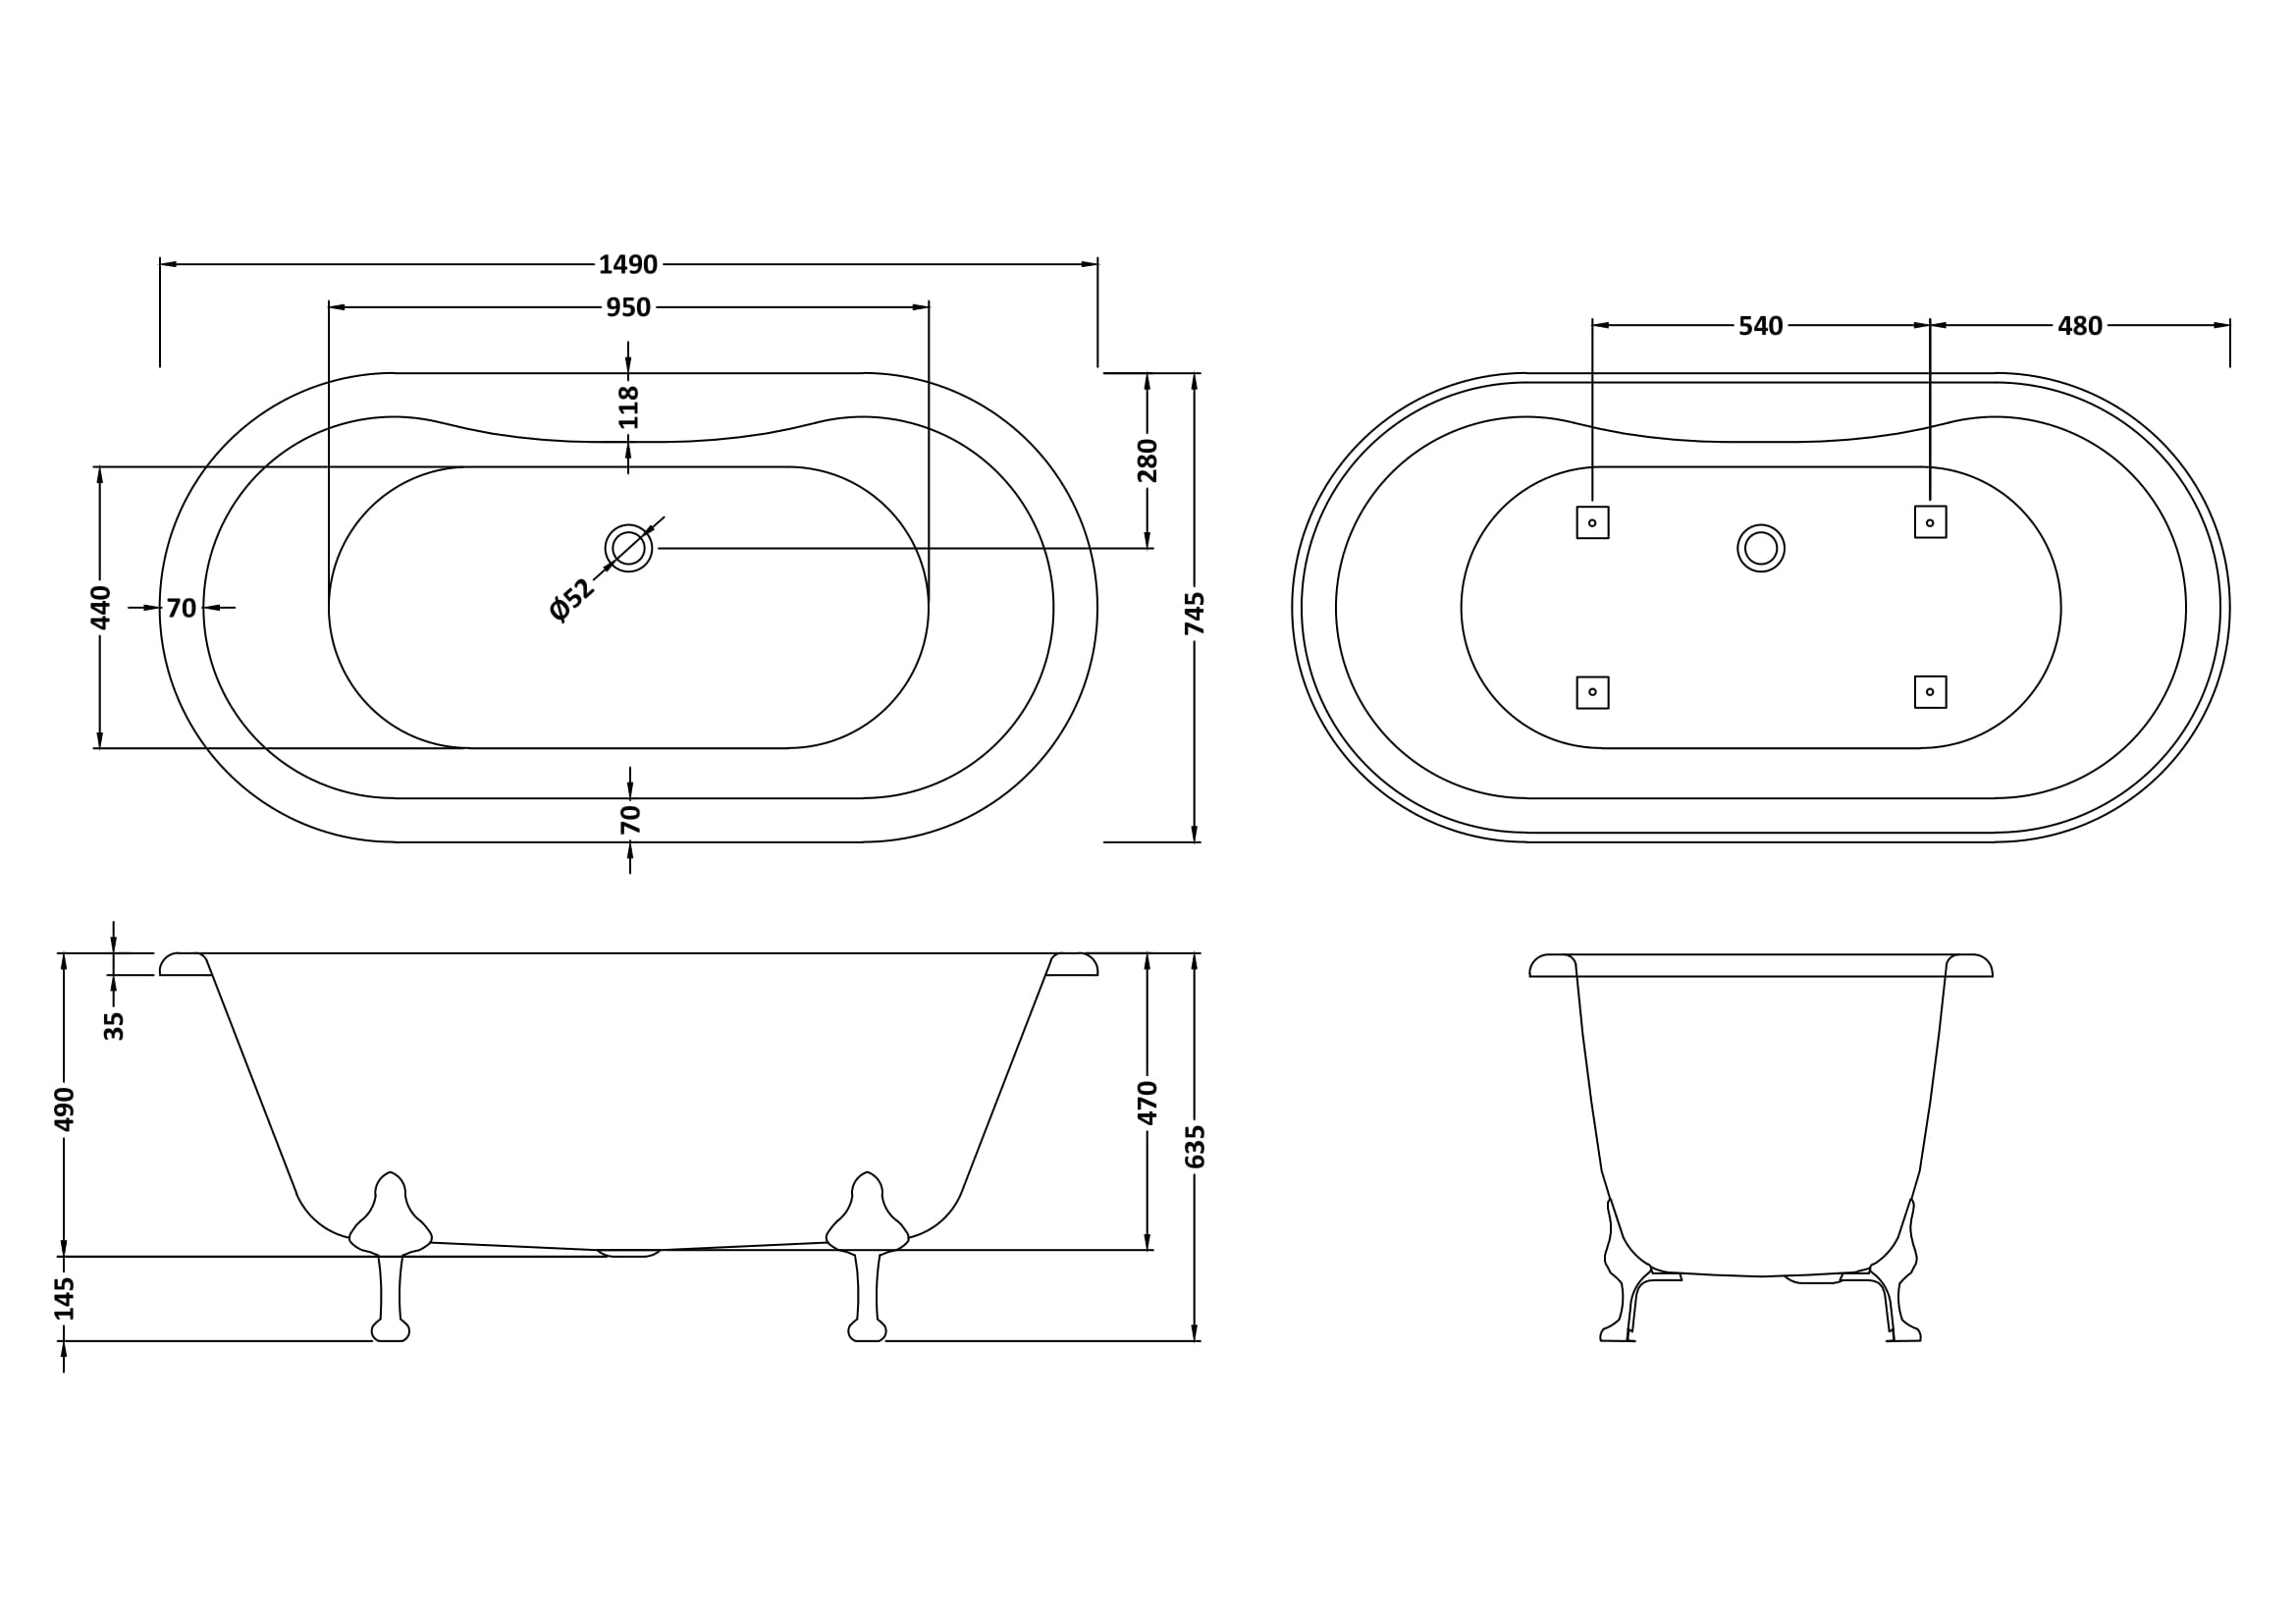 BC Designs Elmstead Acrylic Freestanding Bath, Roll Top Painted Bath With Feet 1500mm x 745mm BAU035 BAU045 technical dimension drawings